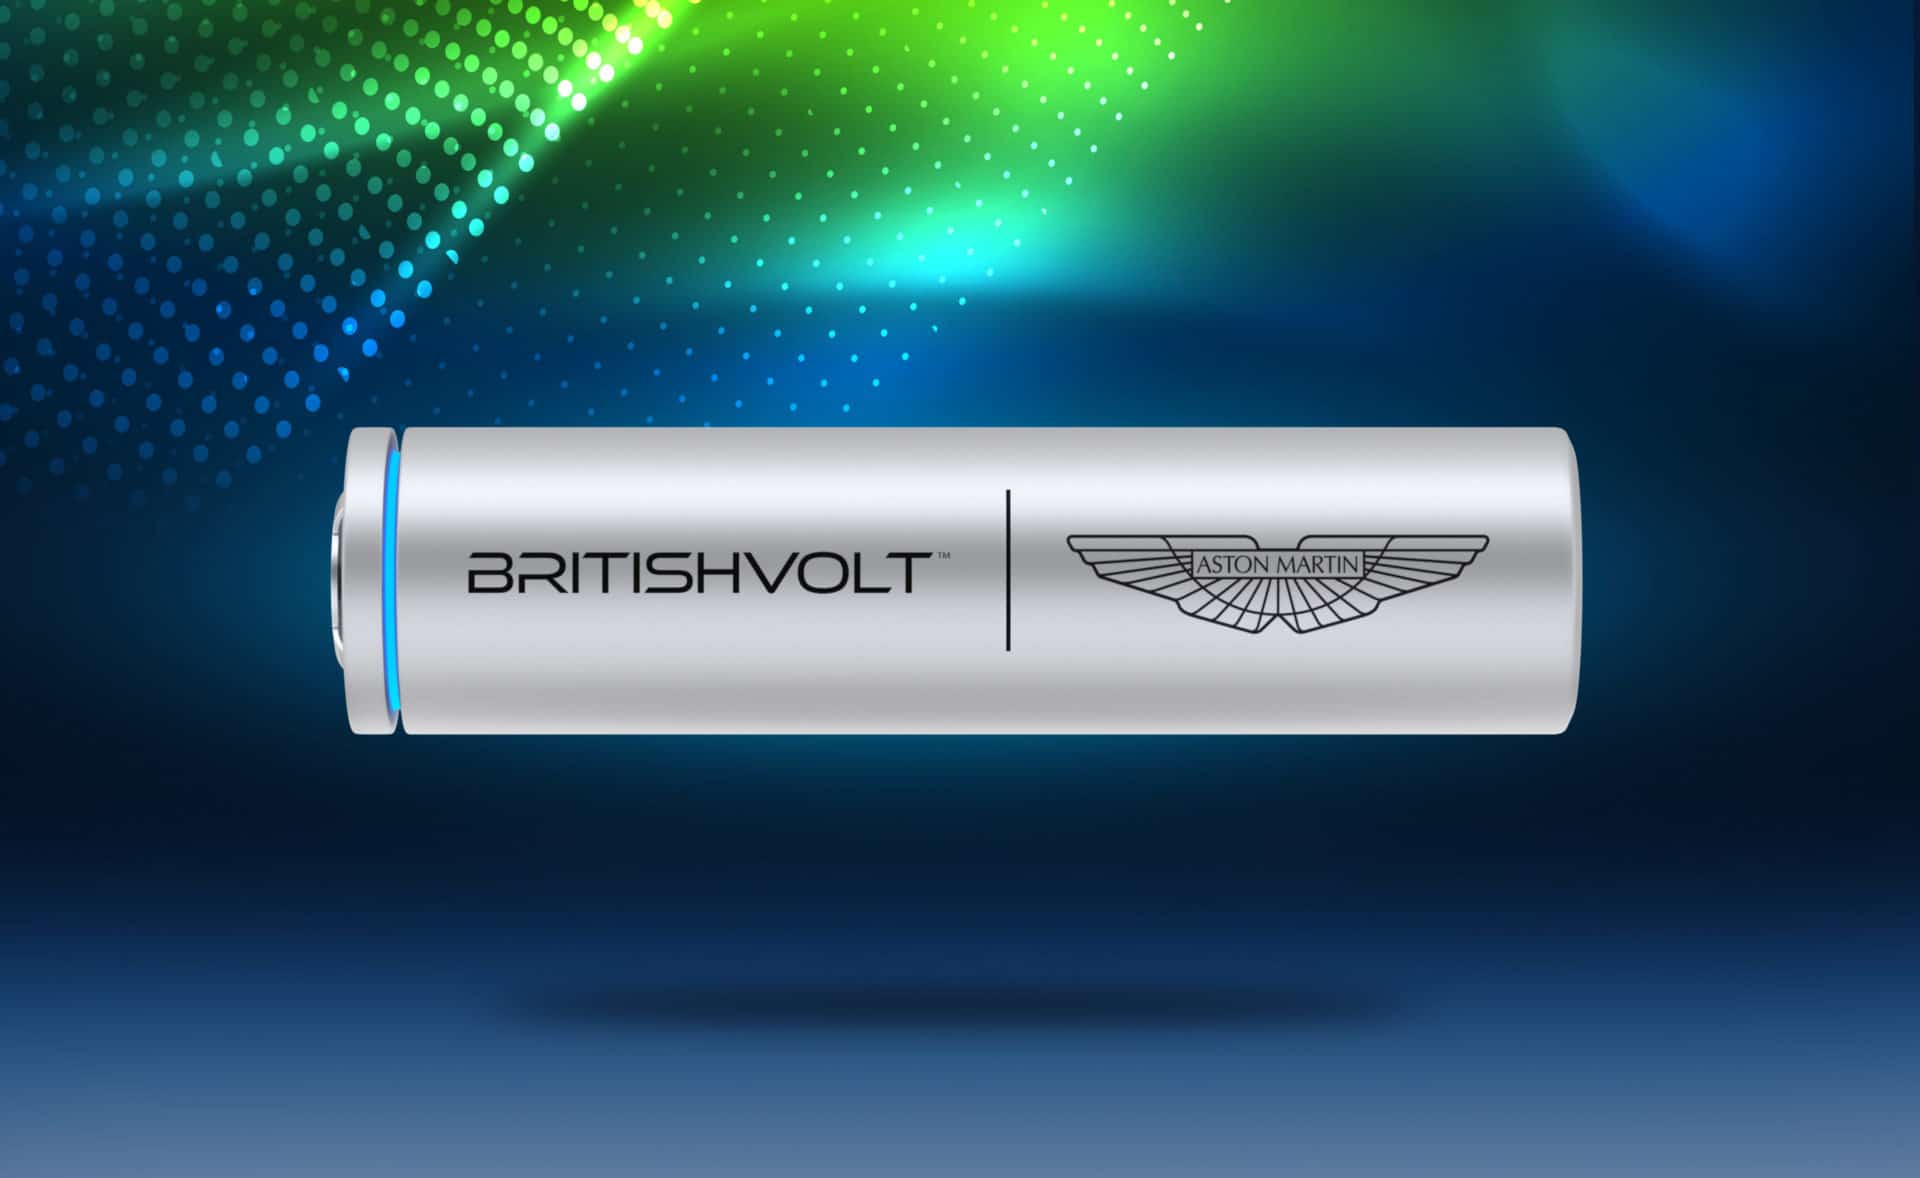 Britishvolt and Aston Martin partner to develop high performance battery technology